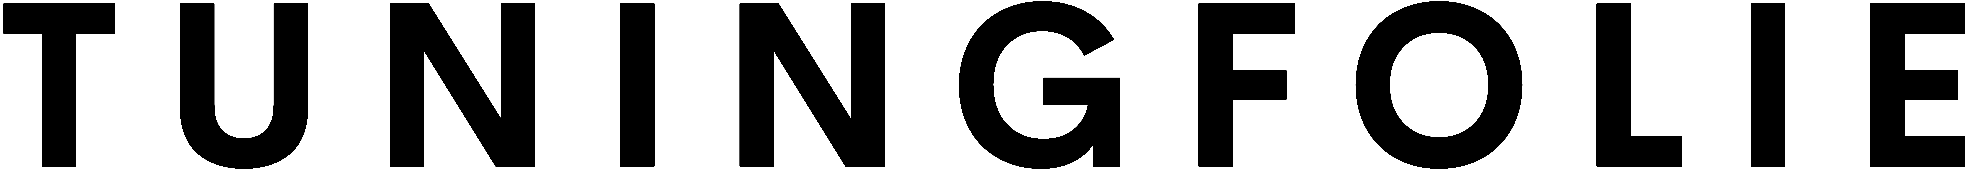 Tuningfolie.eu logo